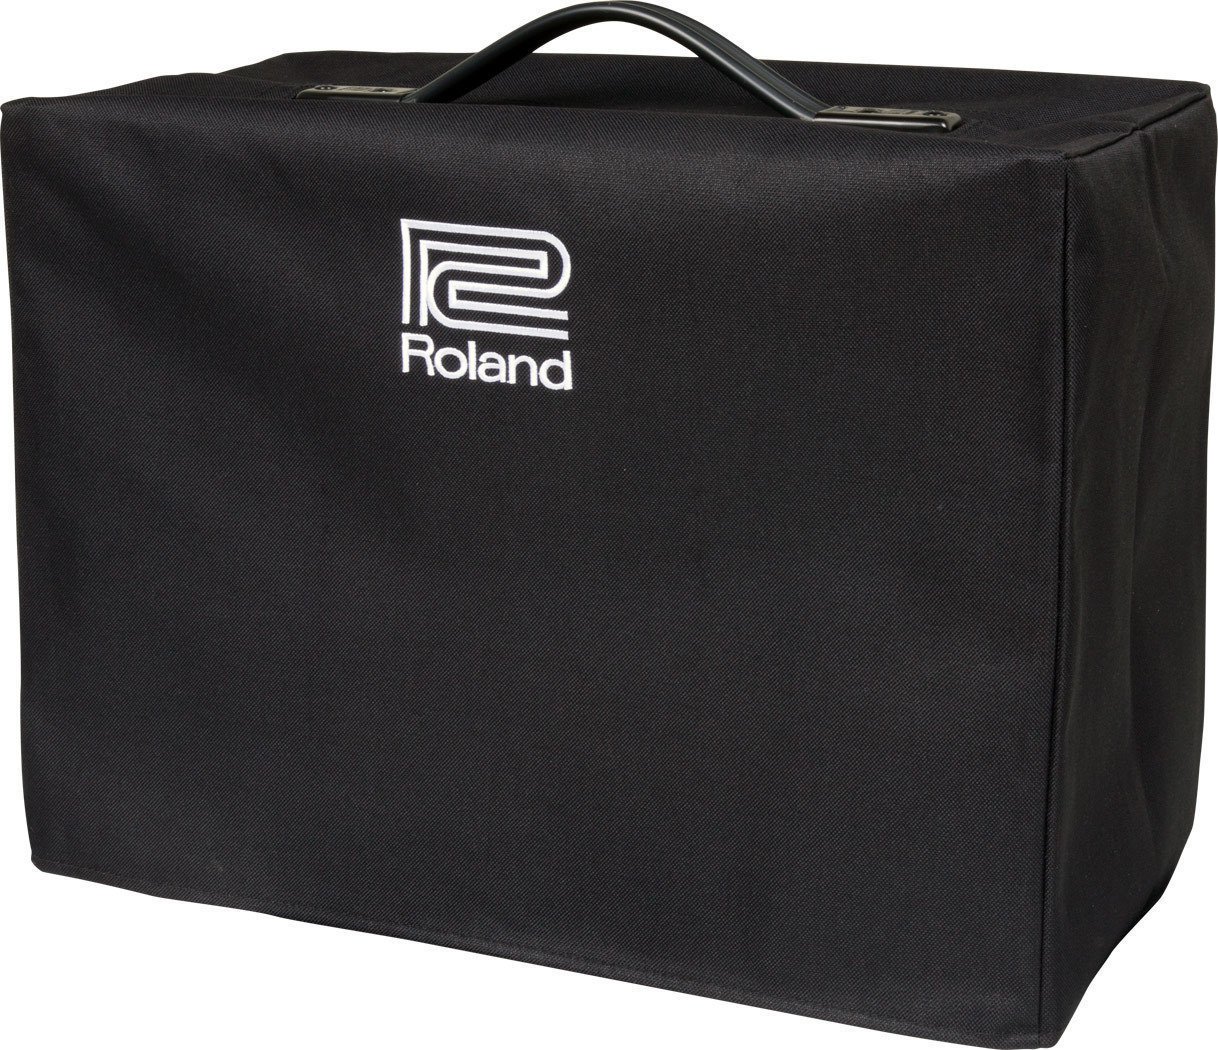 Bag for Guitar Amplifier Roland RAC-JC22 Bag for Guitar Amplifier Black